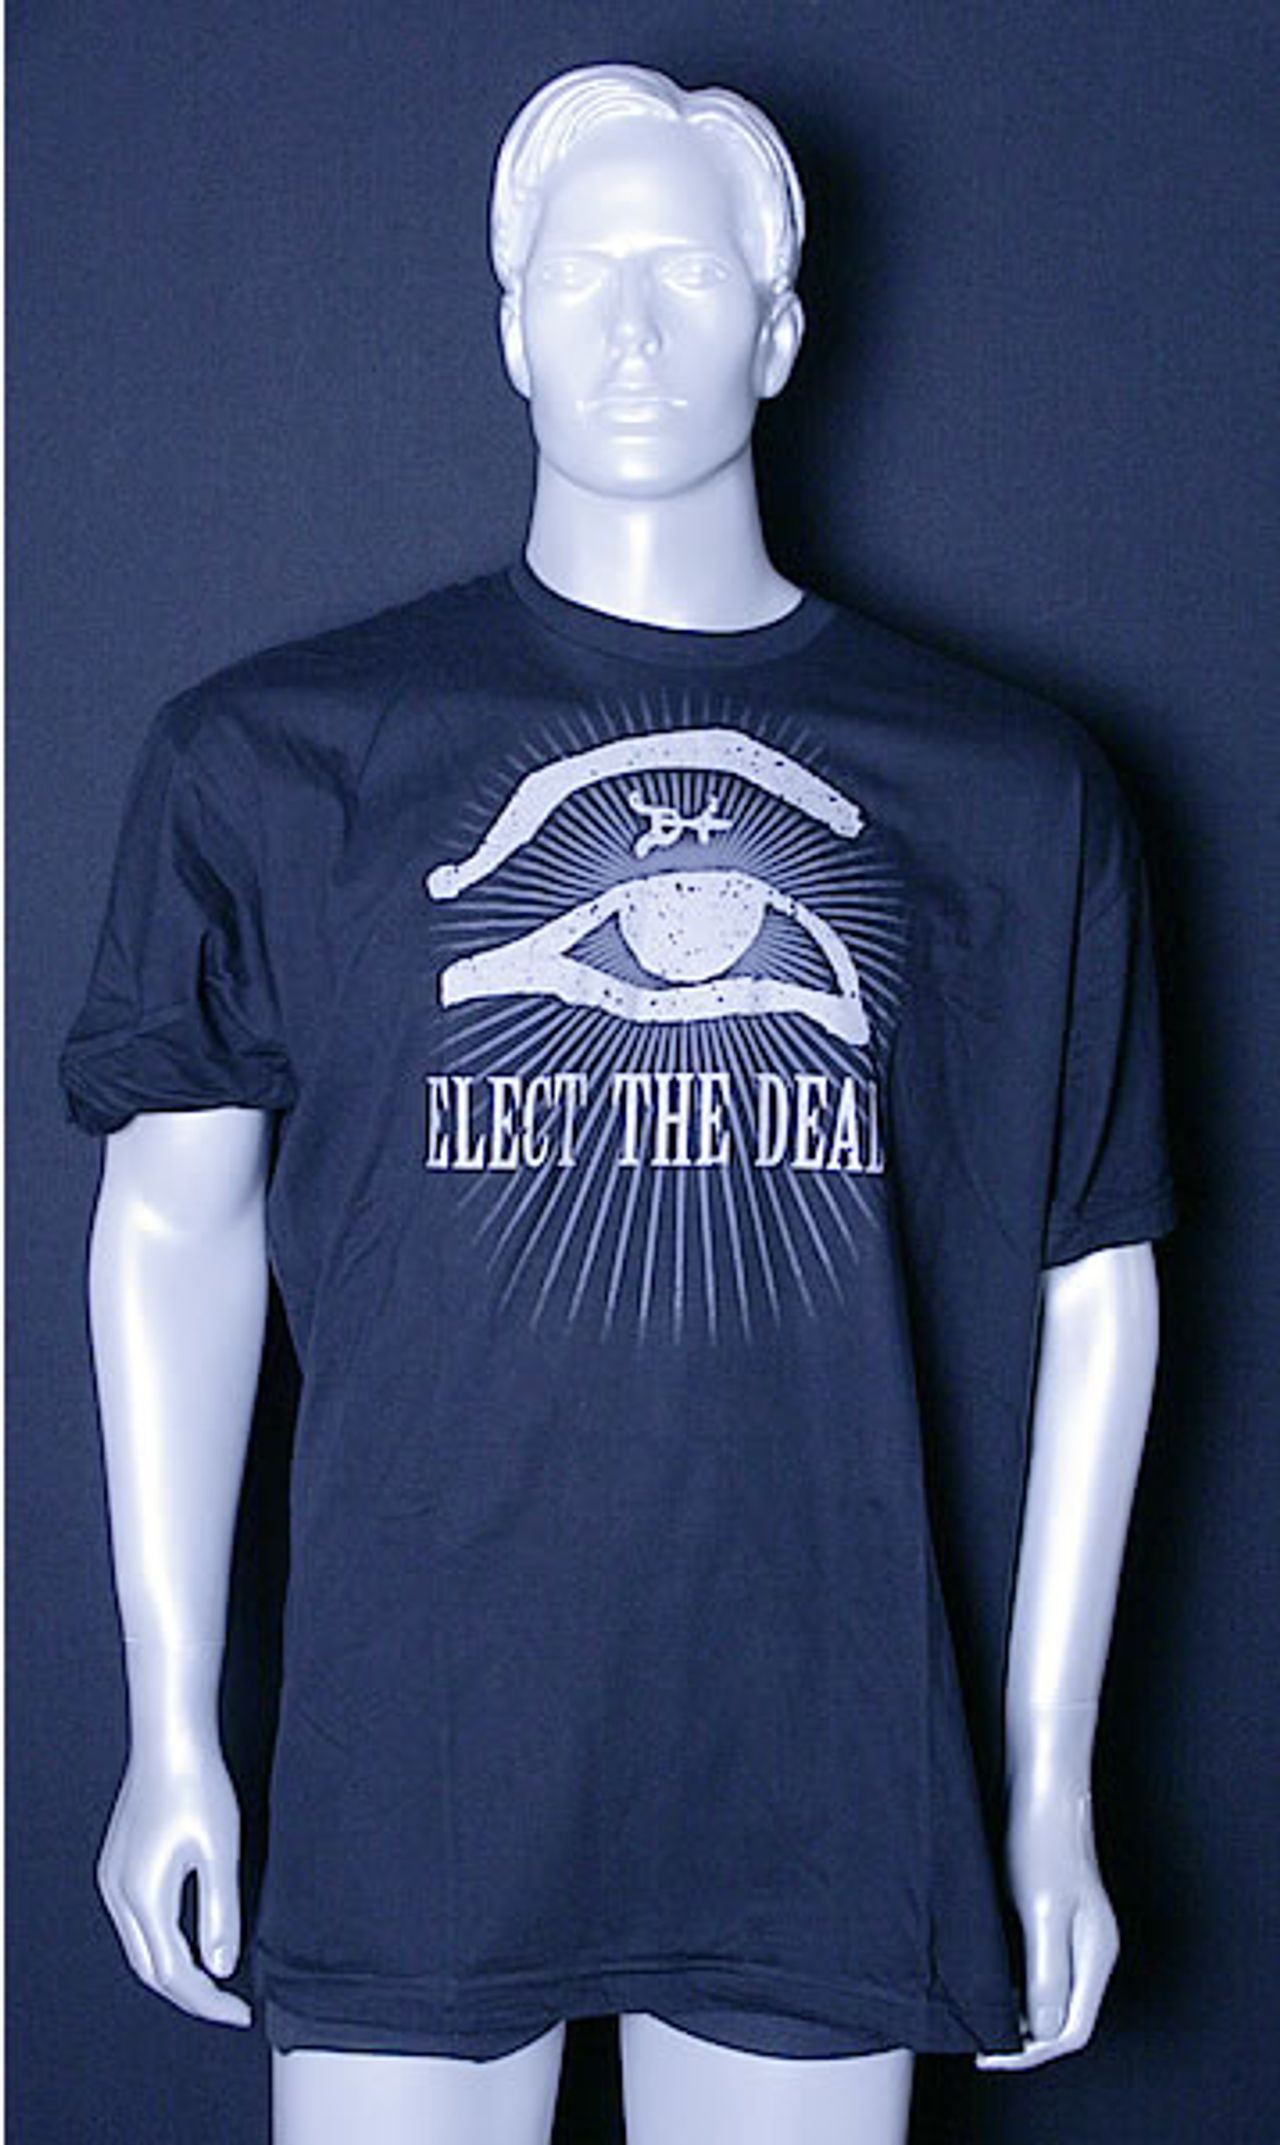 Tankian Elect The Dead T-shirt — RareVinyl.com